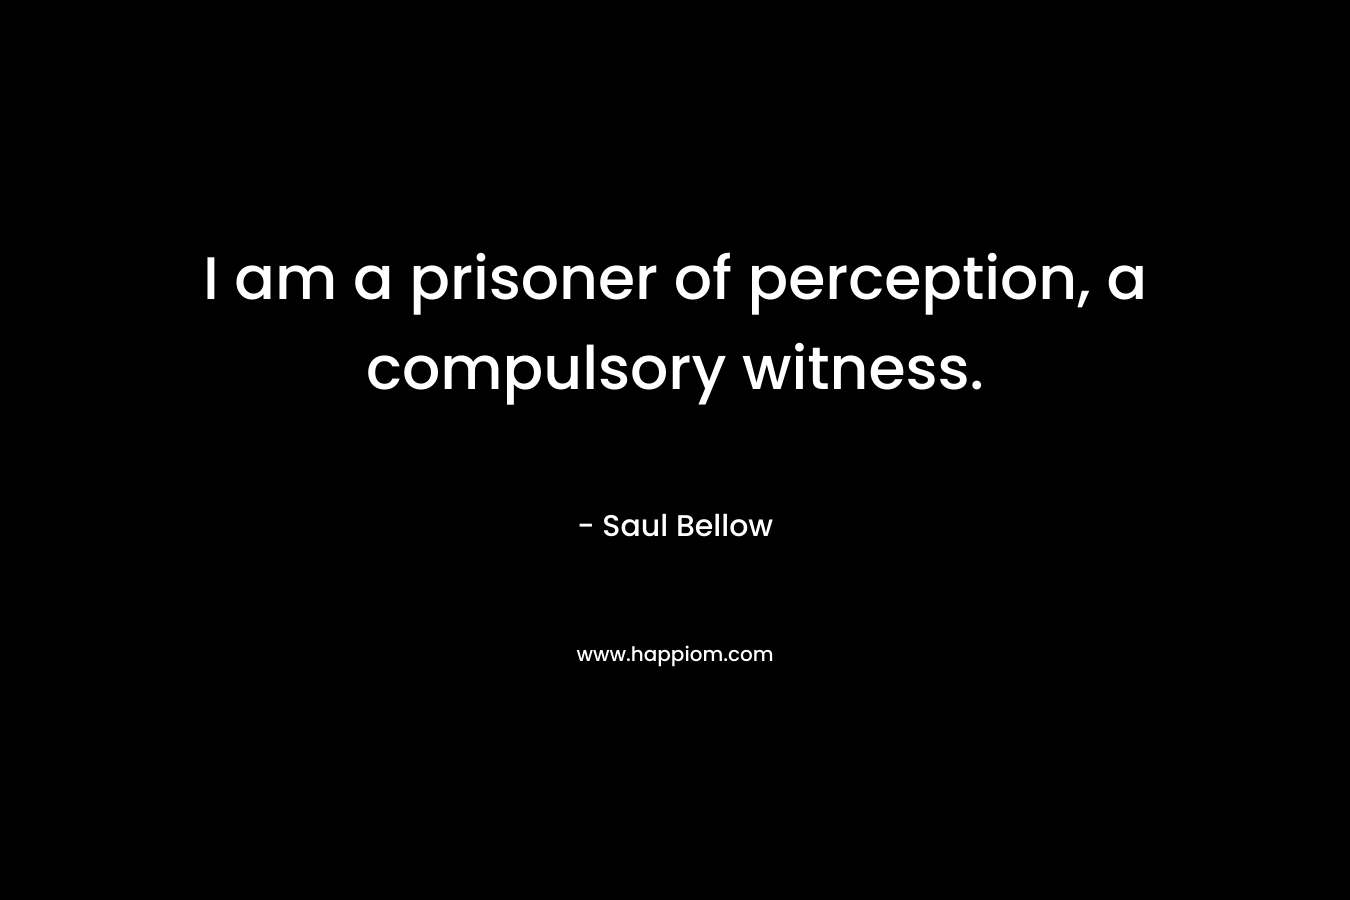 I am a prisoner of perception, a compulsory witness. – Saul Bellow